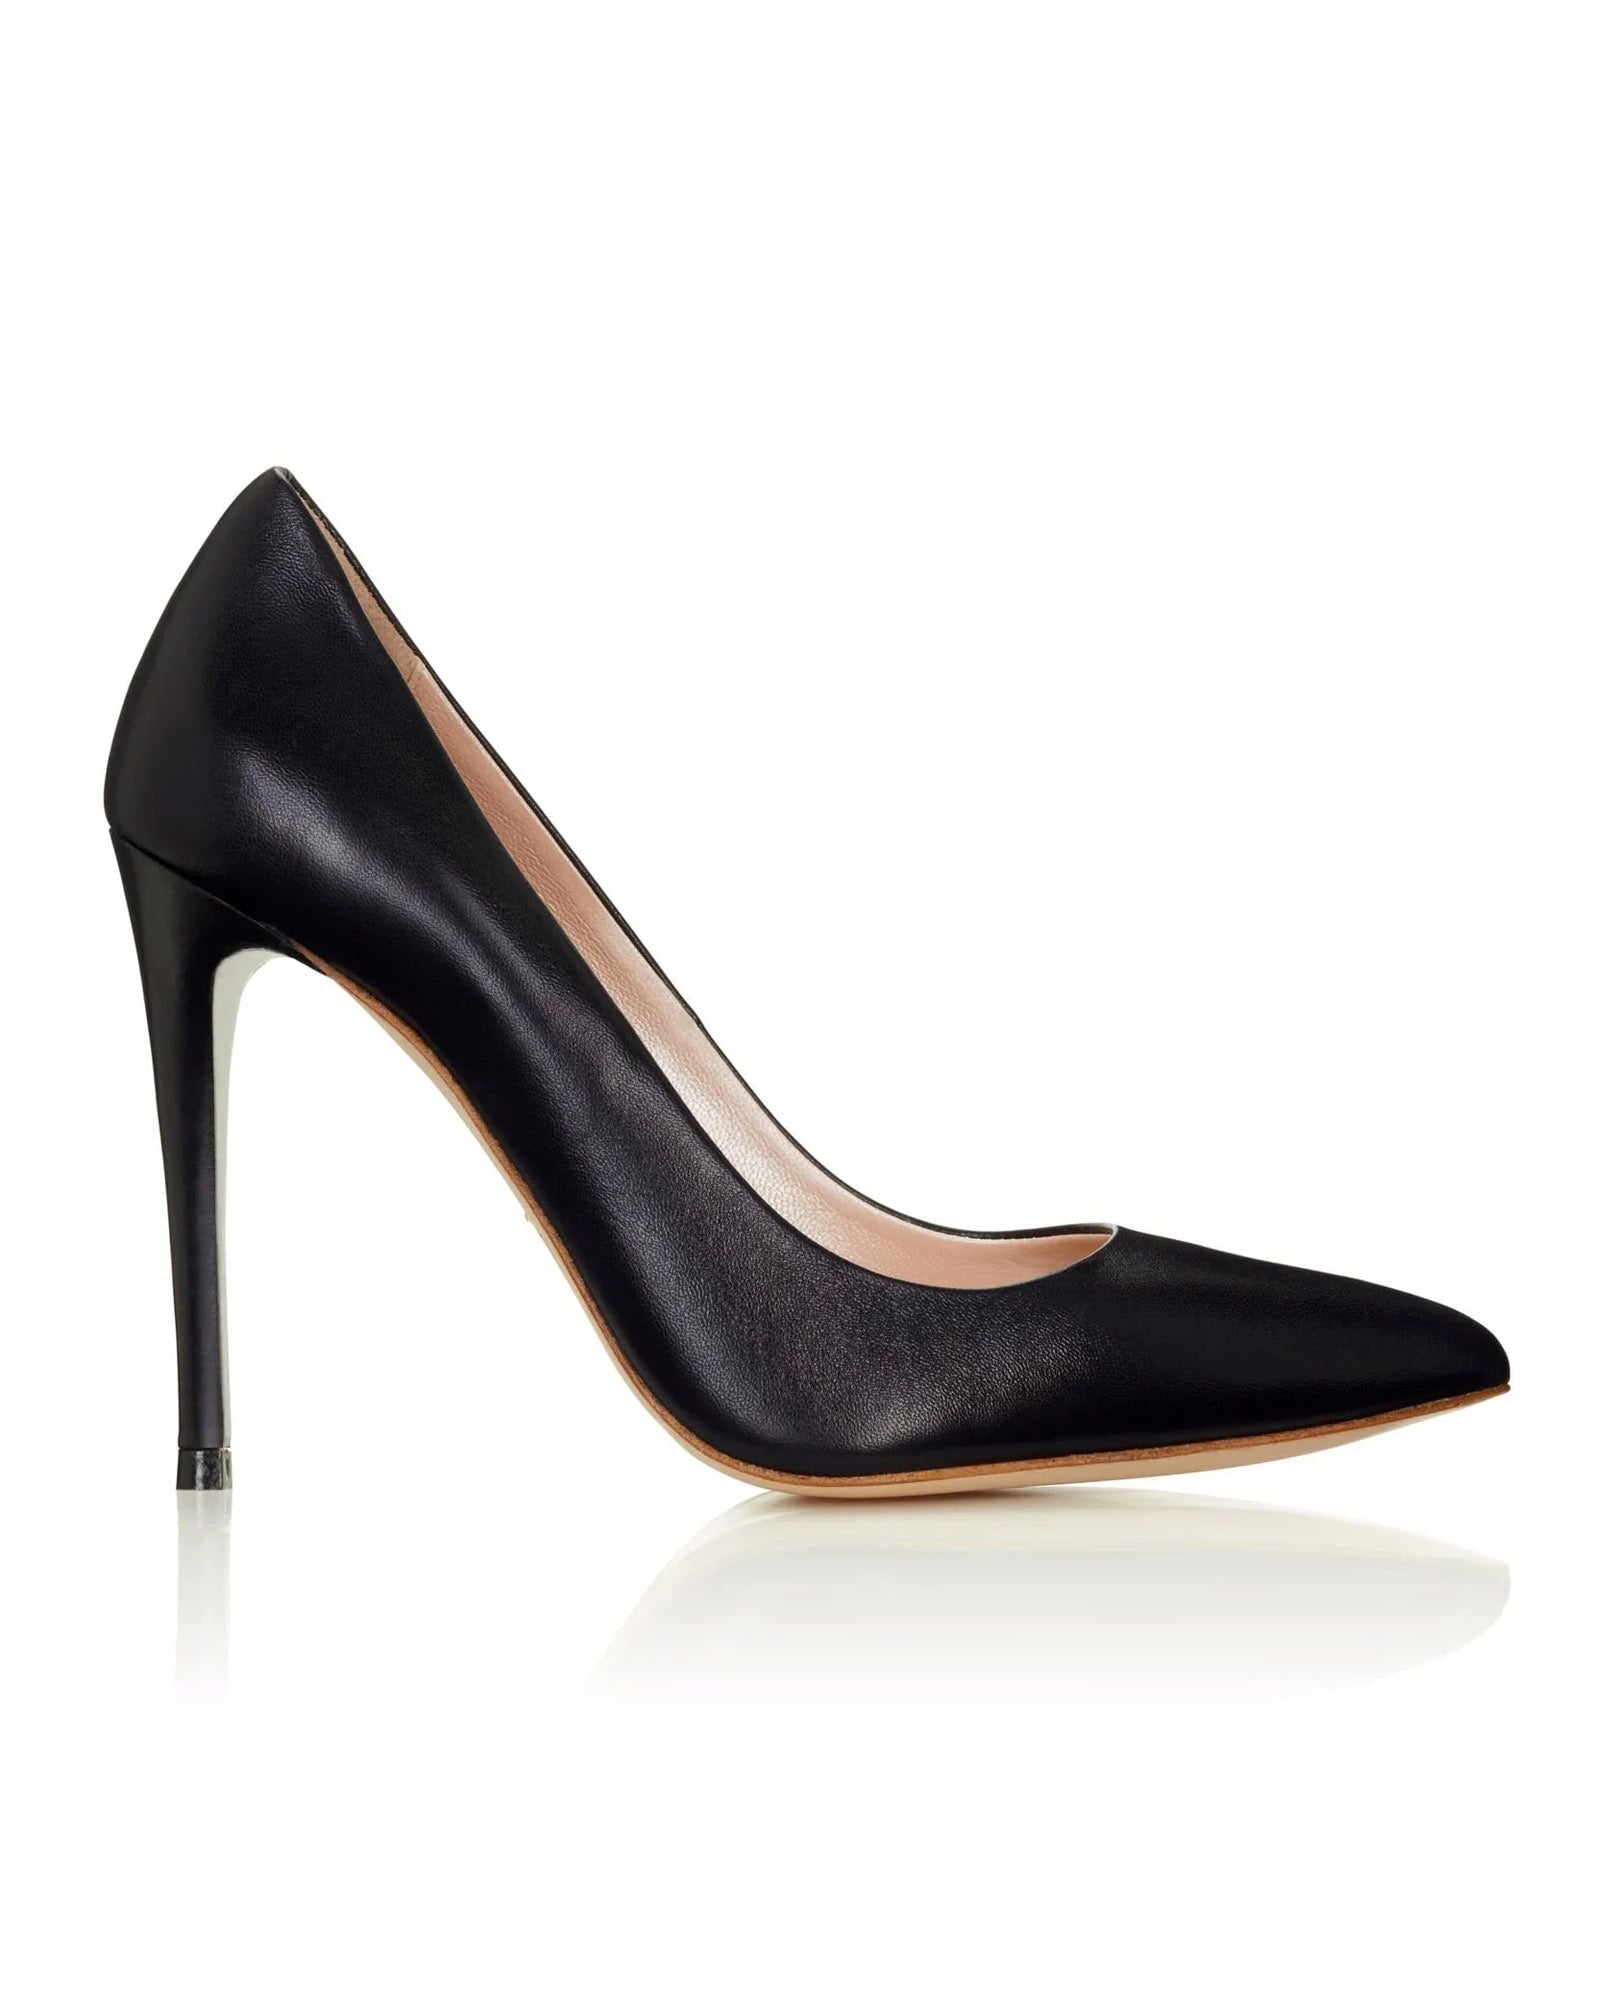 Rebecca Black Leather Fashion Shoe Black Pointed Court Shoe  image